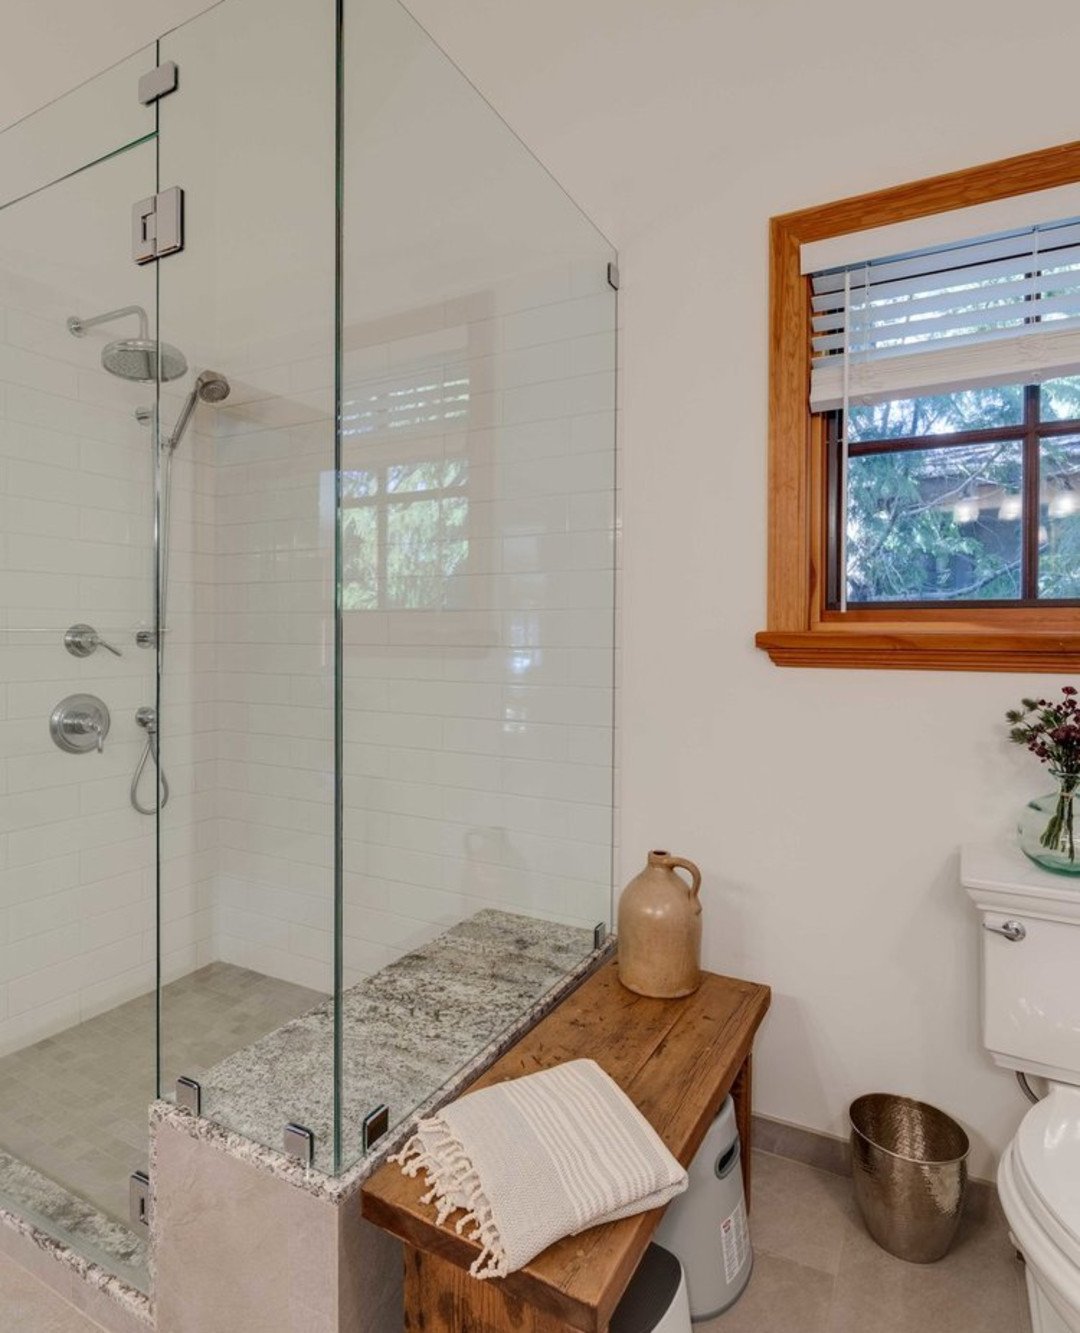 ✨ Bathroom Renovations by Whistler Builder✨

✔️ Entry guest bath 🚿
✔️ Ground floor suite 🛁
✔️ Main floor ensuite 🪨